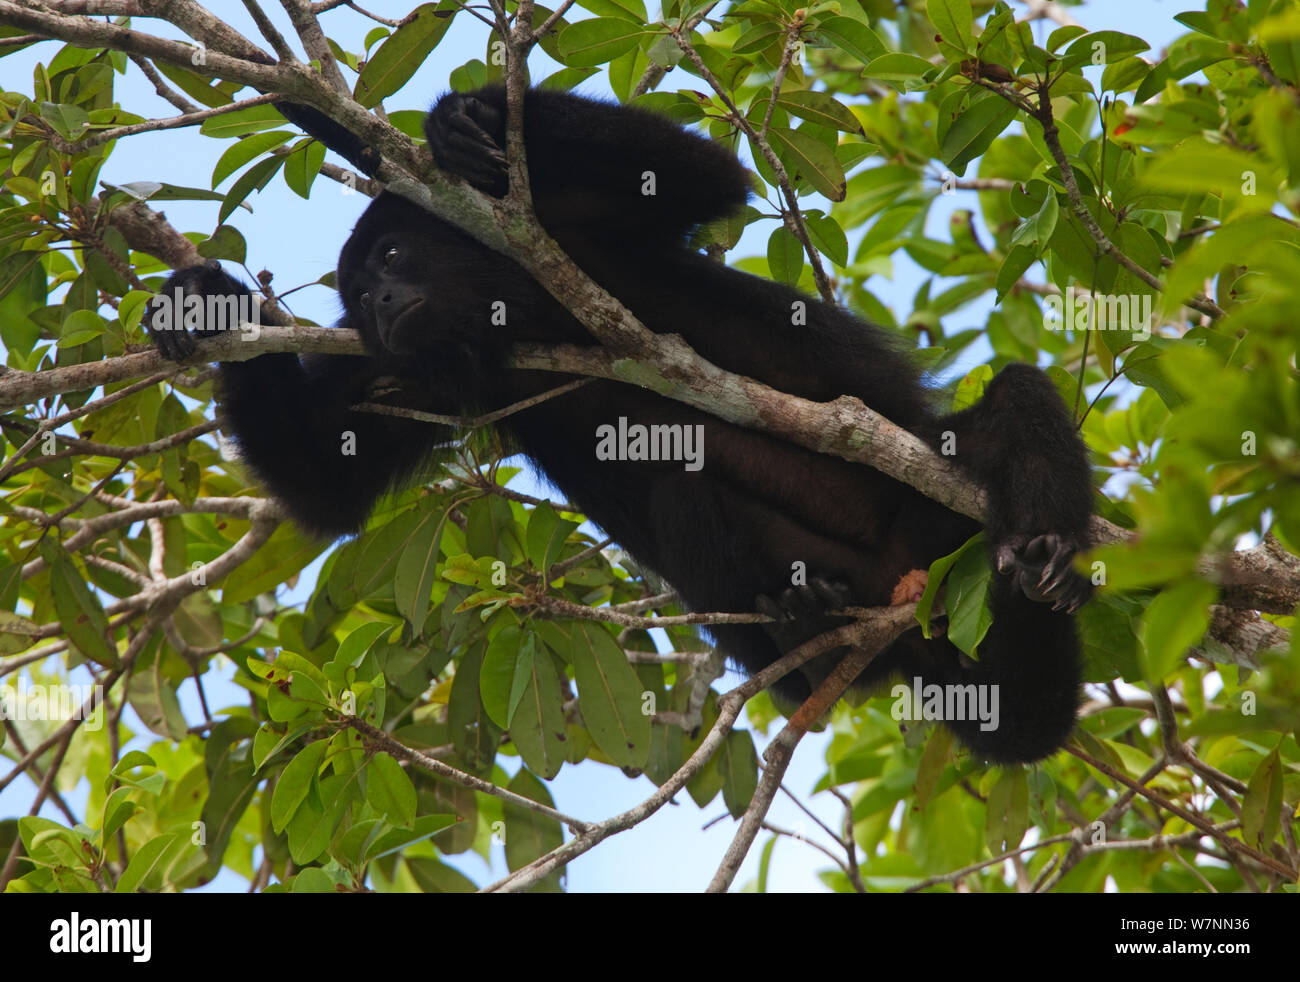 Yucatan Black Howler Monkey (Alouatta pigra),  Calakmul Biosphere Reserve, Yucatan Peninsula, Mexico. Endangered species. Stock Photo